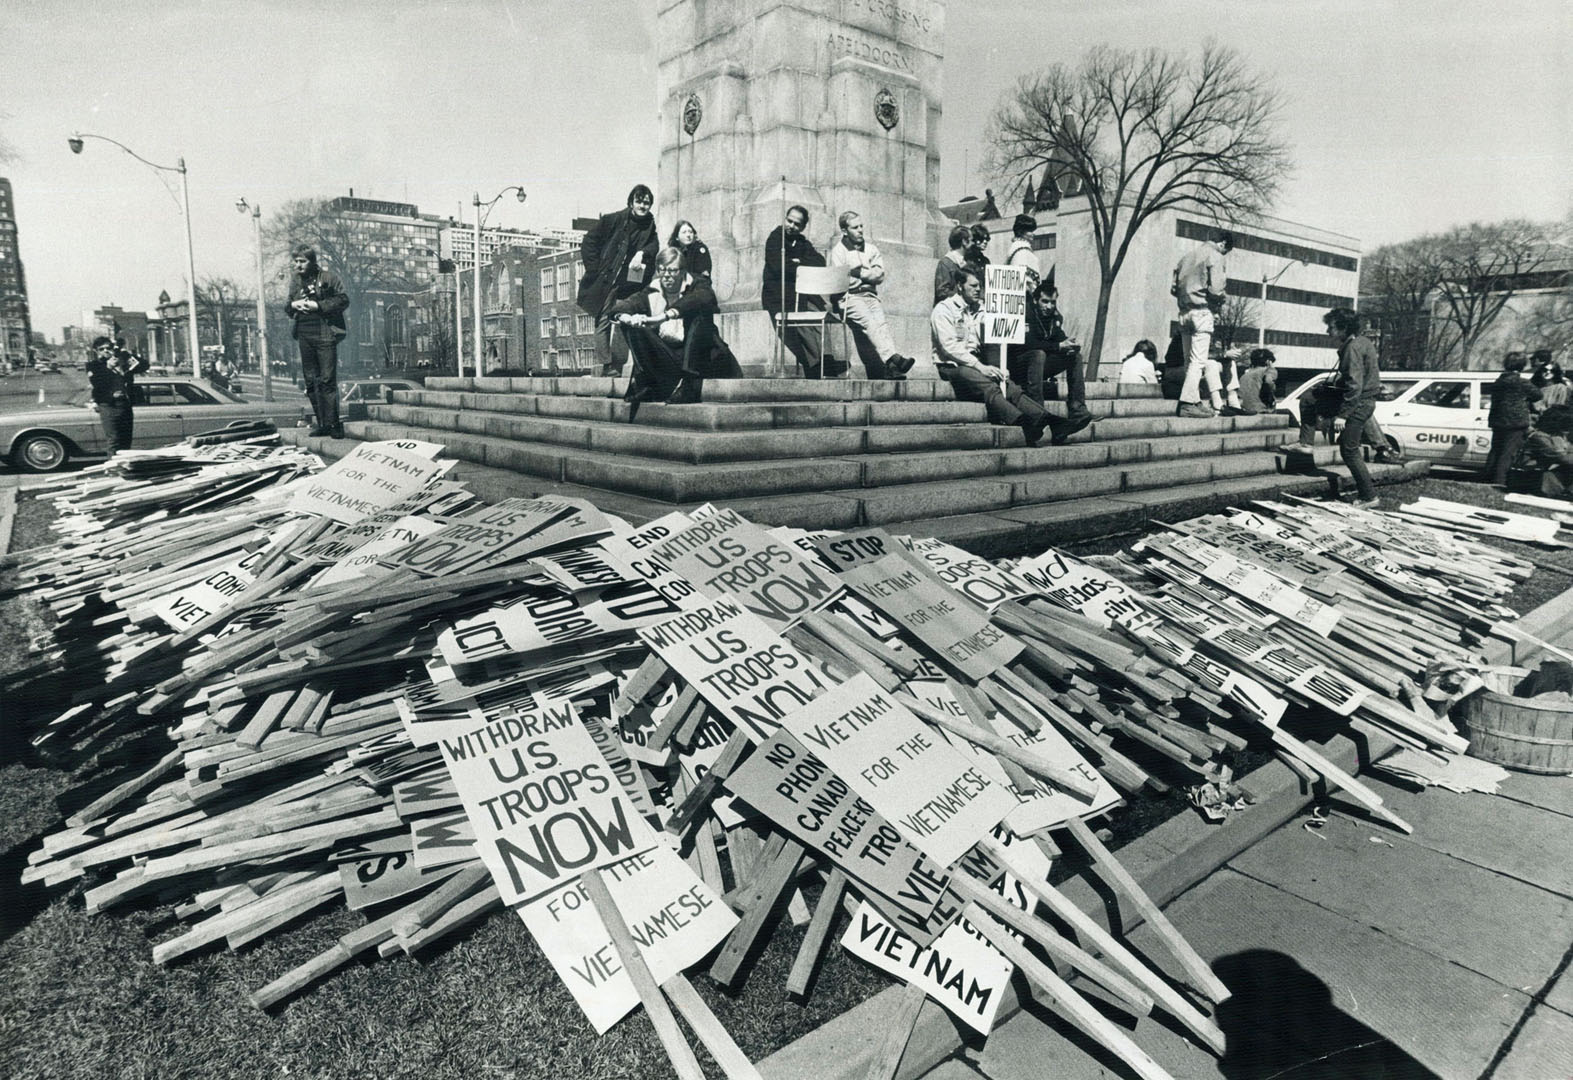 Title: Anti-Vietnam War placards surround Toronto’s war memorial in 1969. Photographer: Reg. Innell Date: April 6, 1969